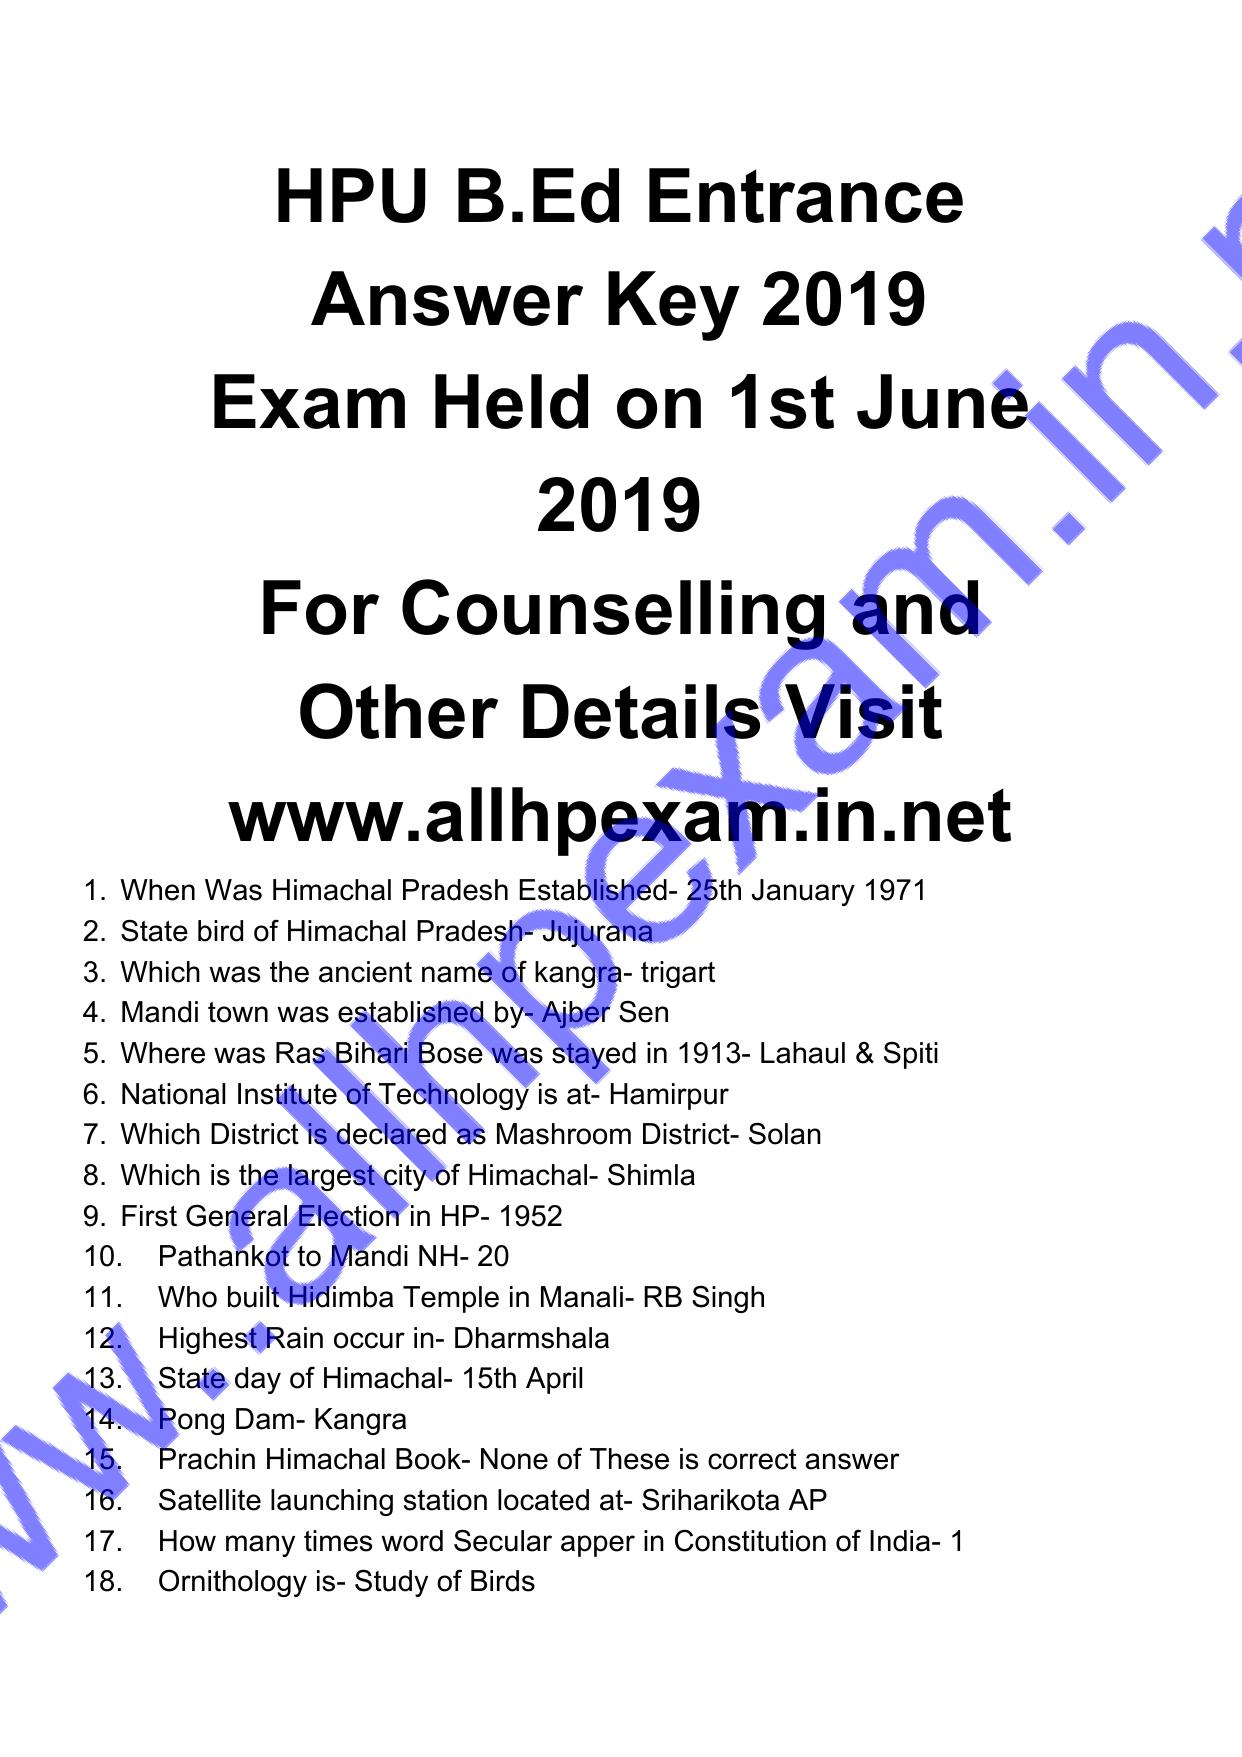 HPU B.Ed. Entrance Test 2019 Question Paper - Page 1